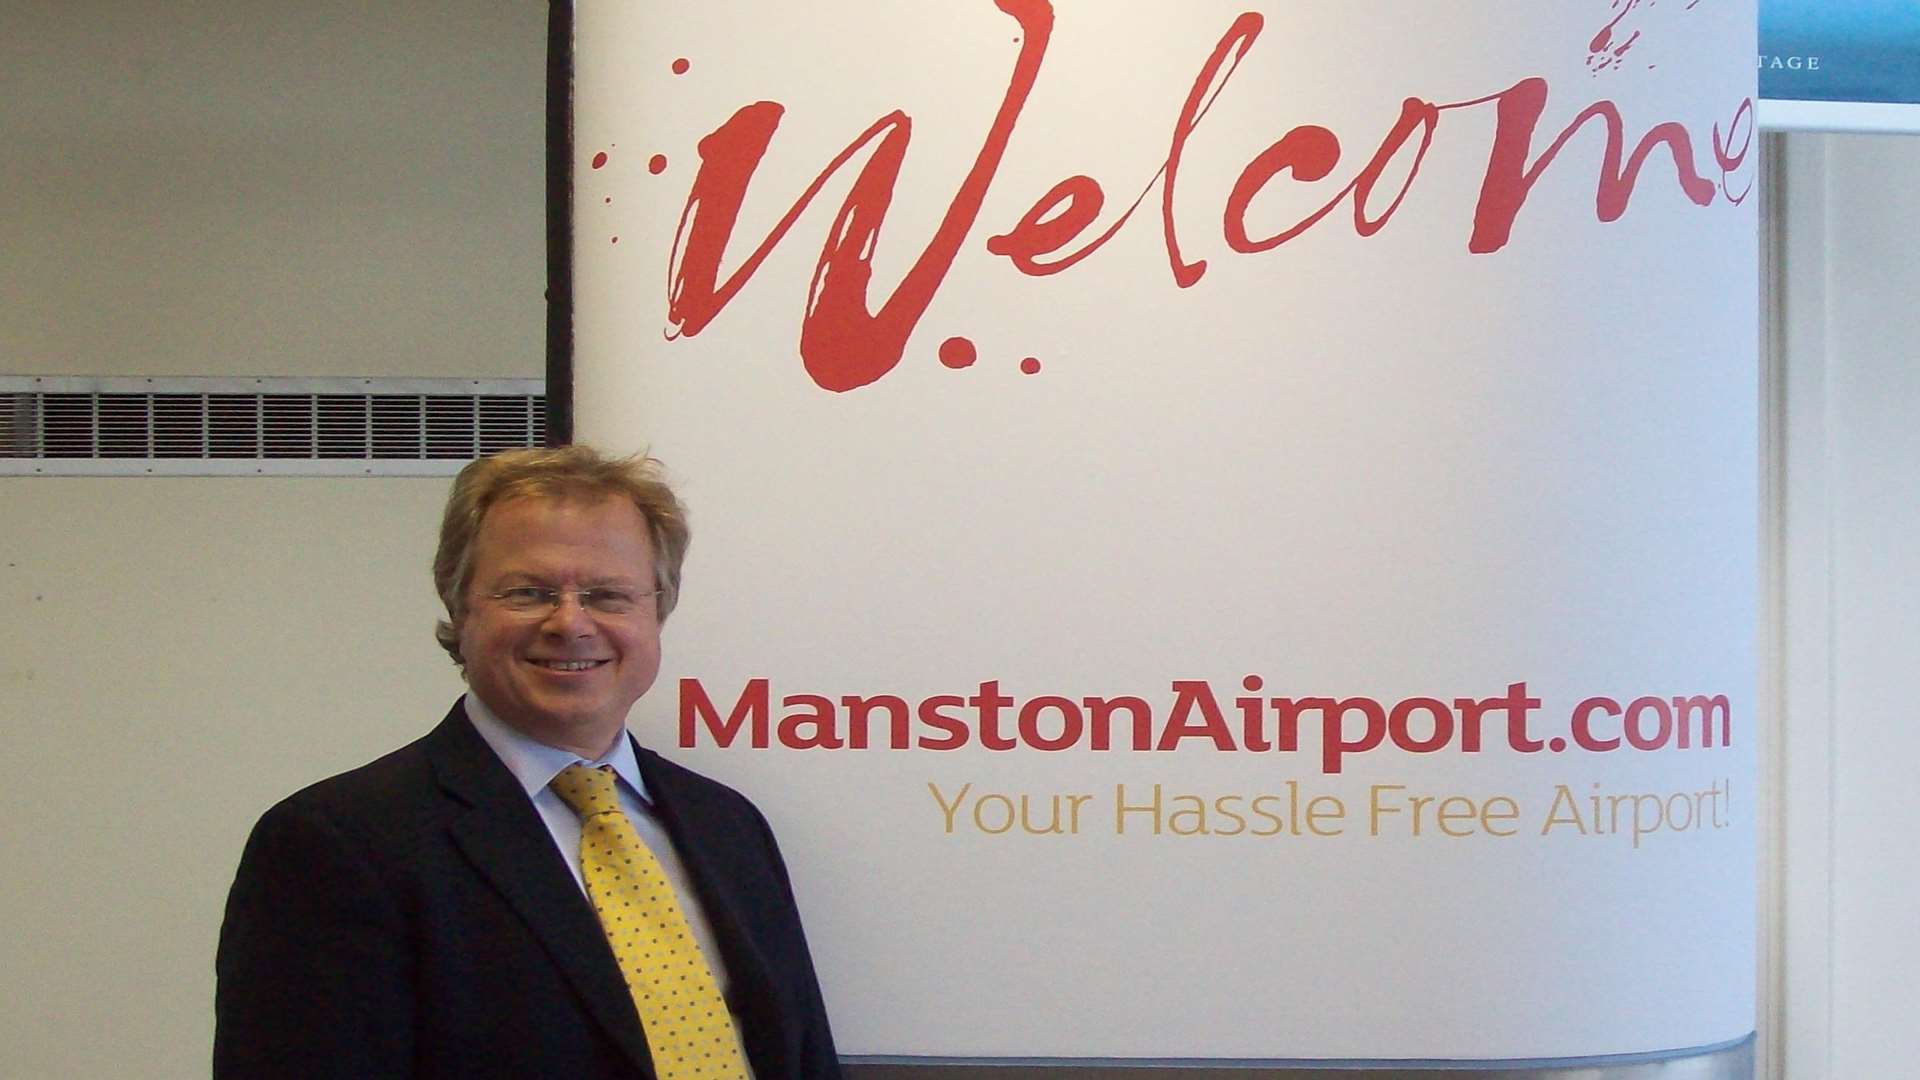 Manston Airport chief executive Charles Buchanan